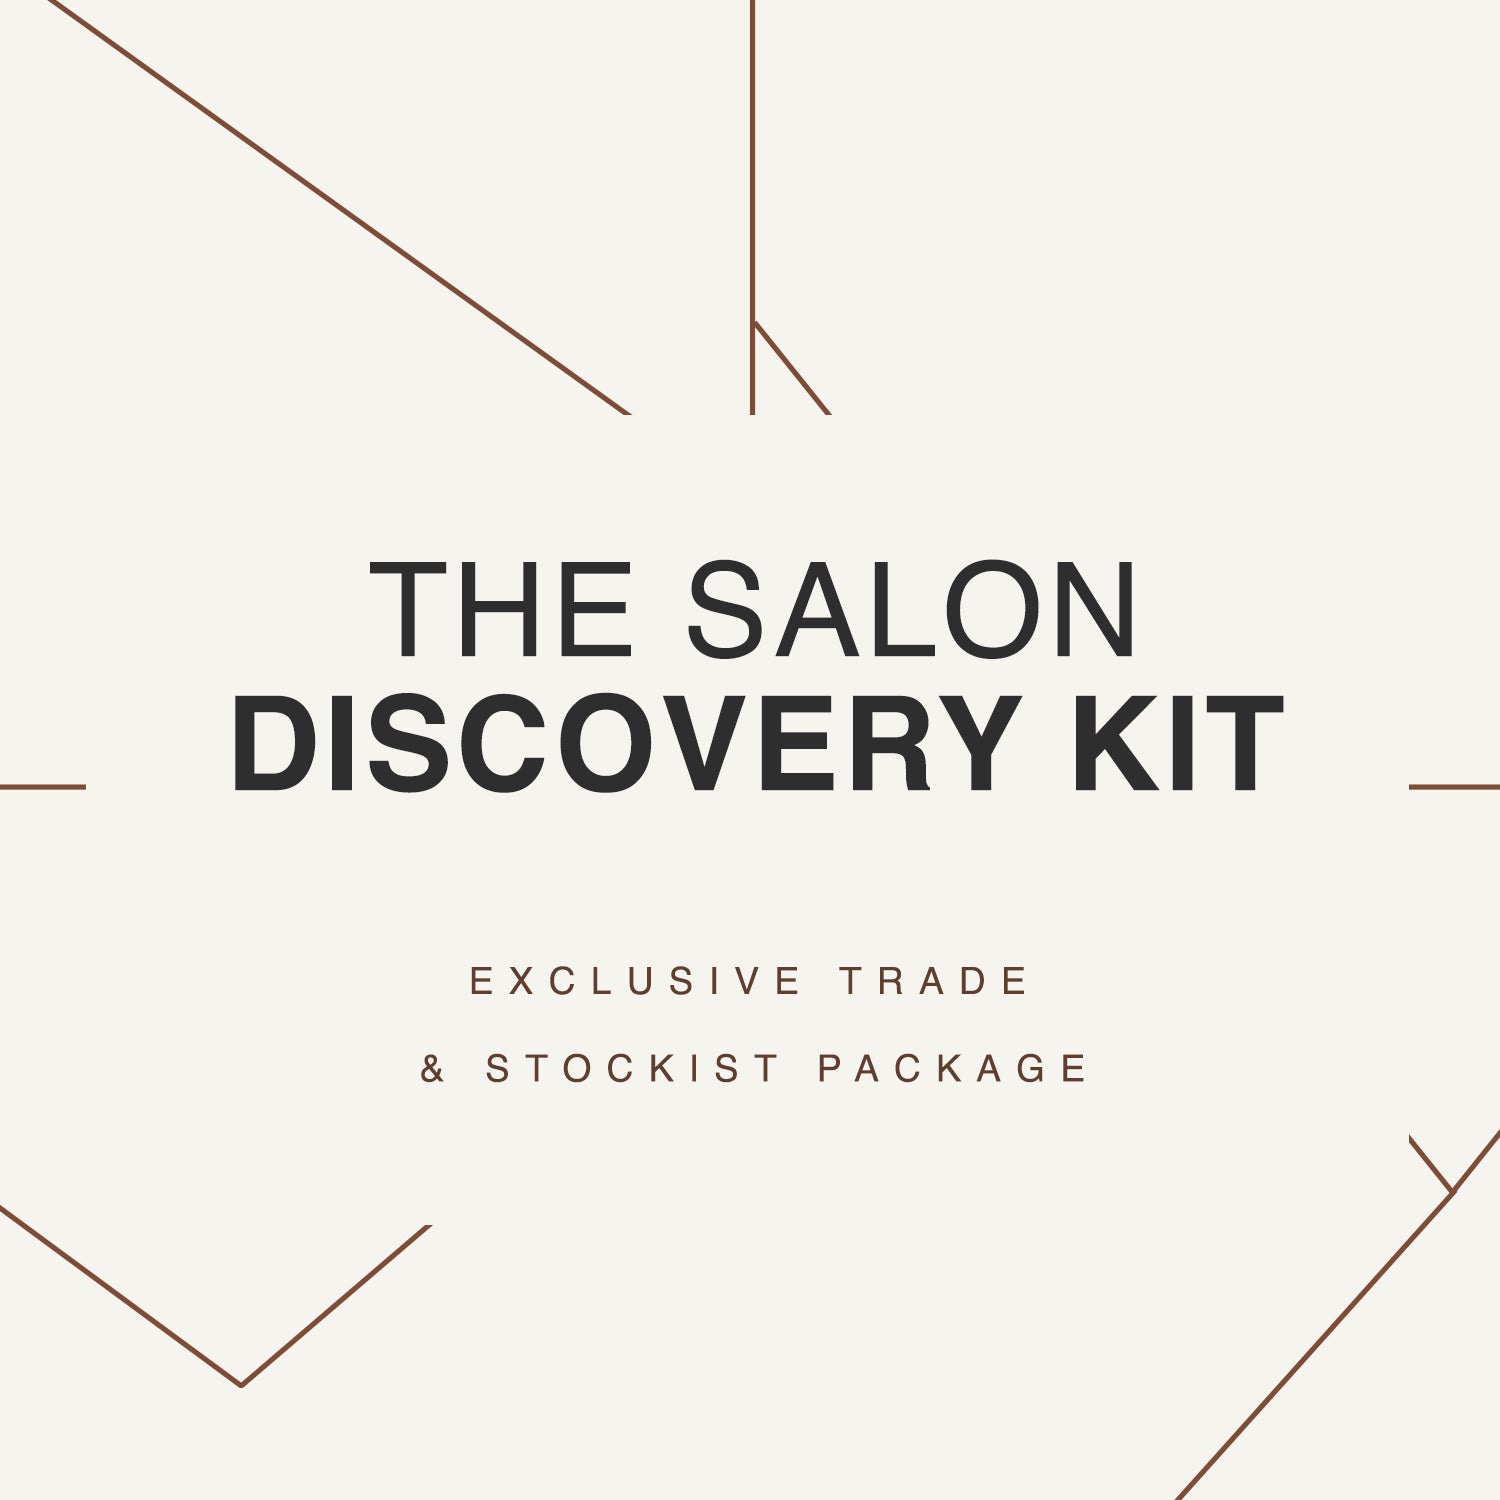 The Salon Discovery Kit